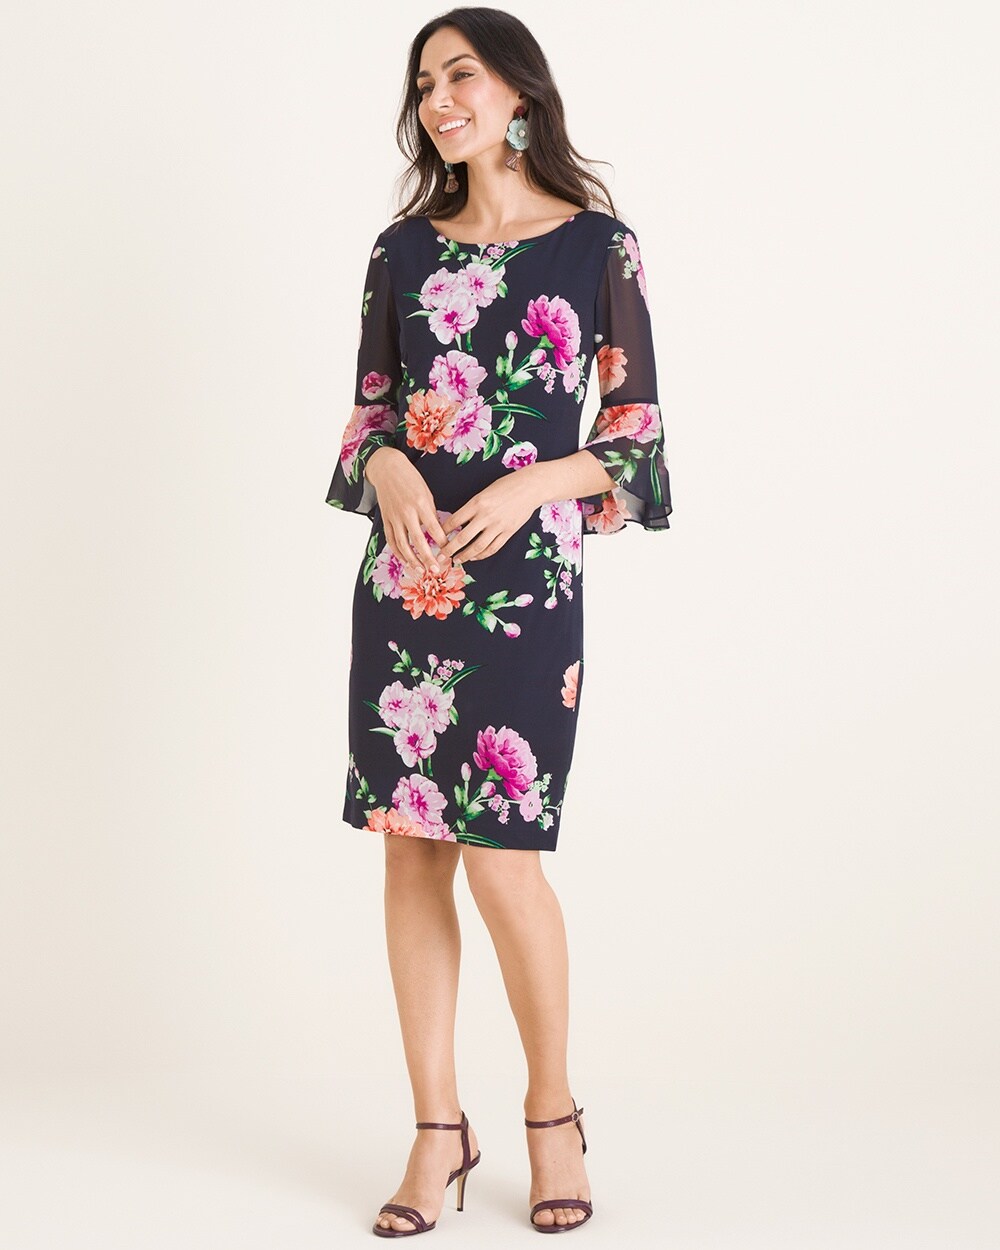 Floral Sleeve-Detail Dress